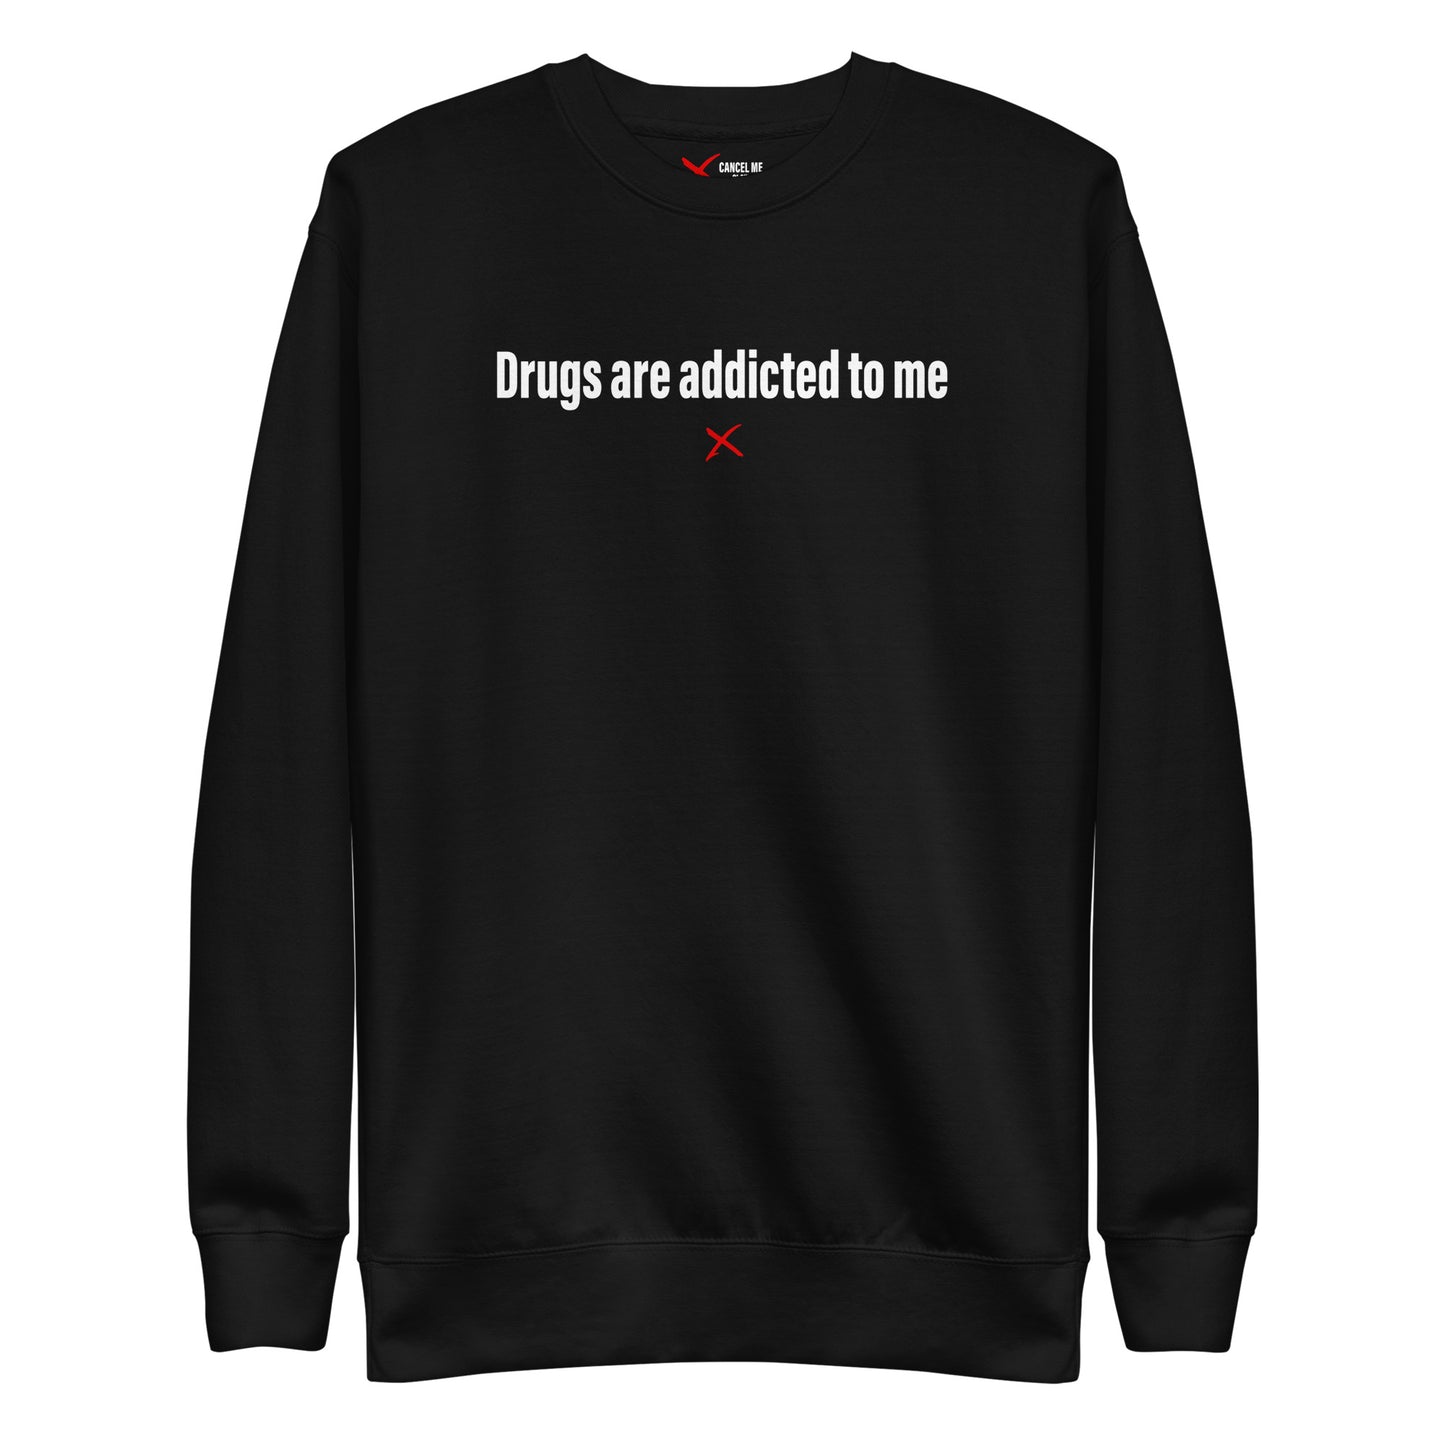 Drugs are addicted to me - Sweatshirt